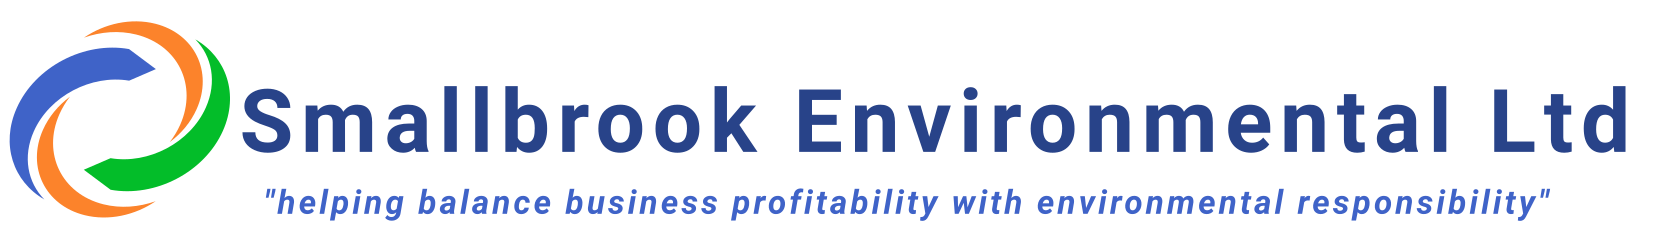 Smallbrook Environmental Ltd